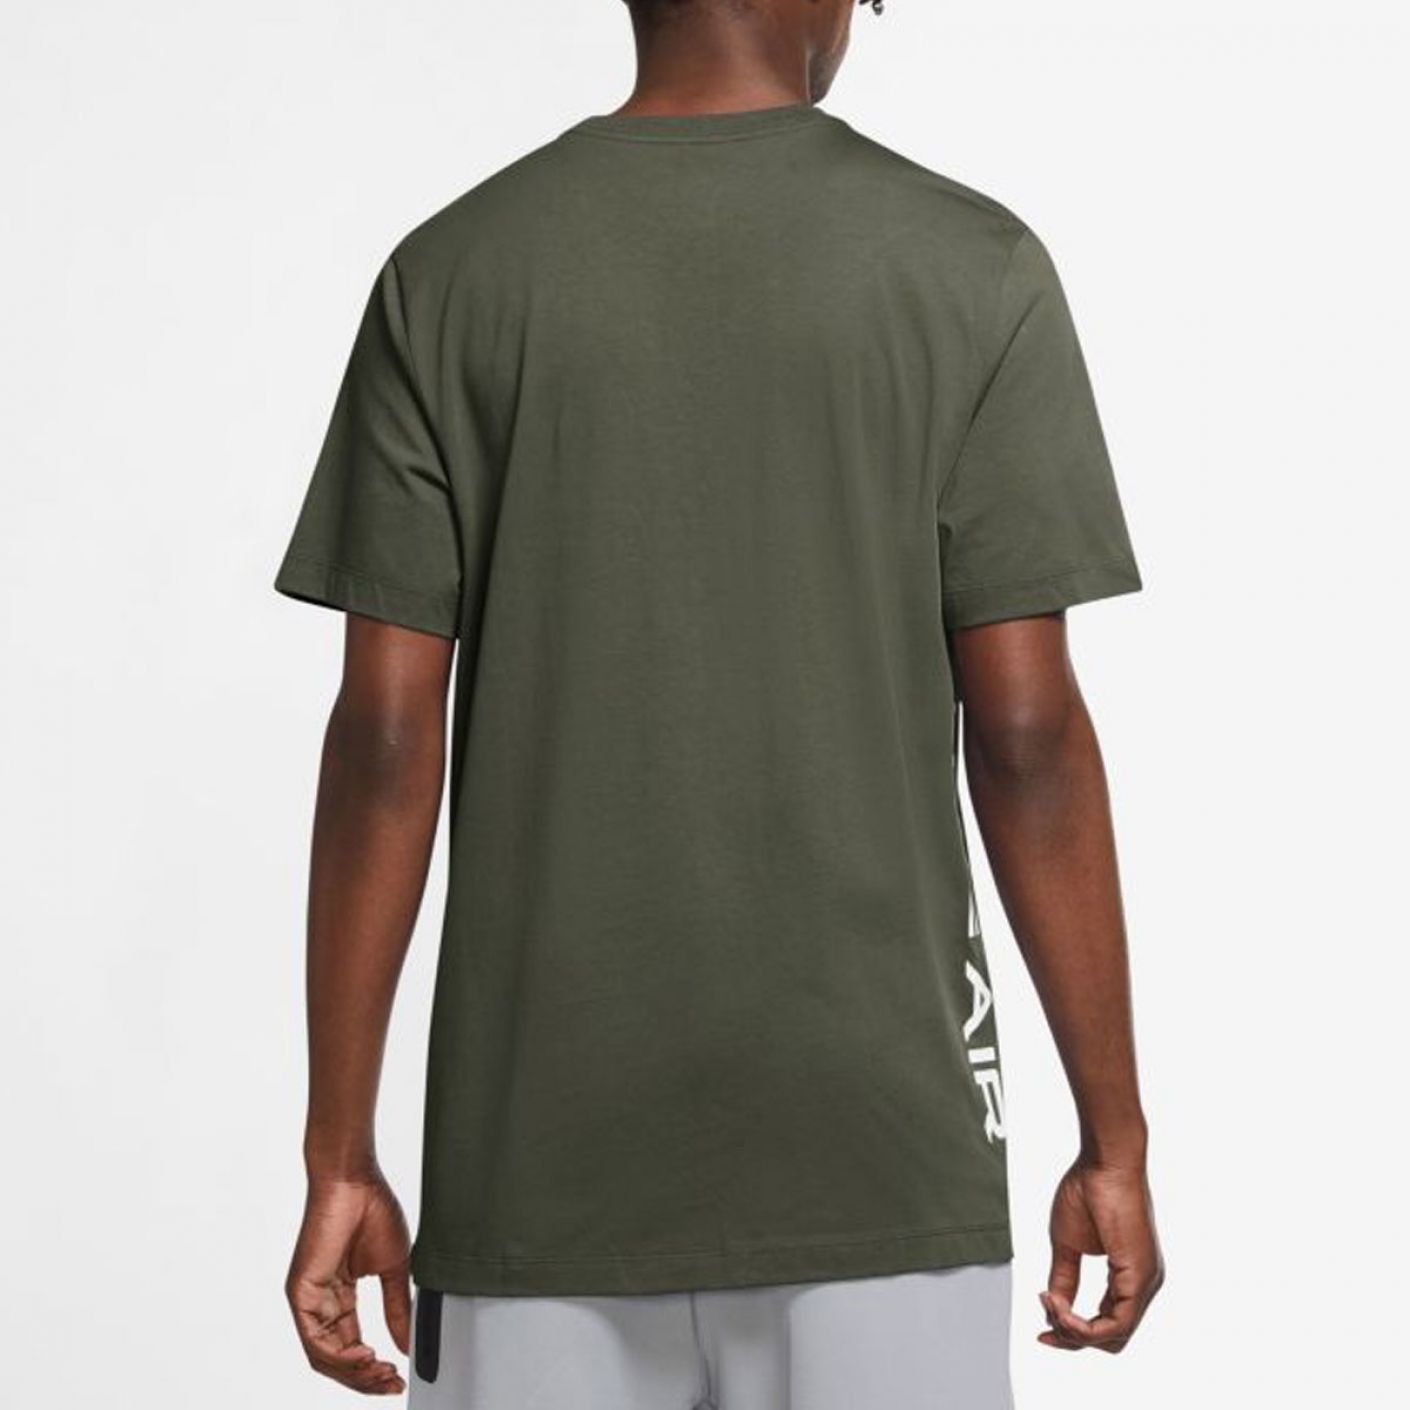 Nike T-shirt Man Tee Air Green for Men